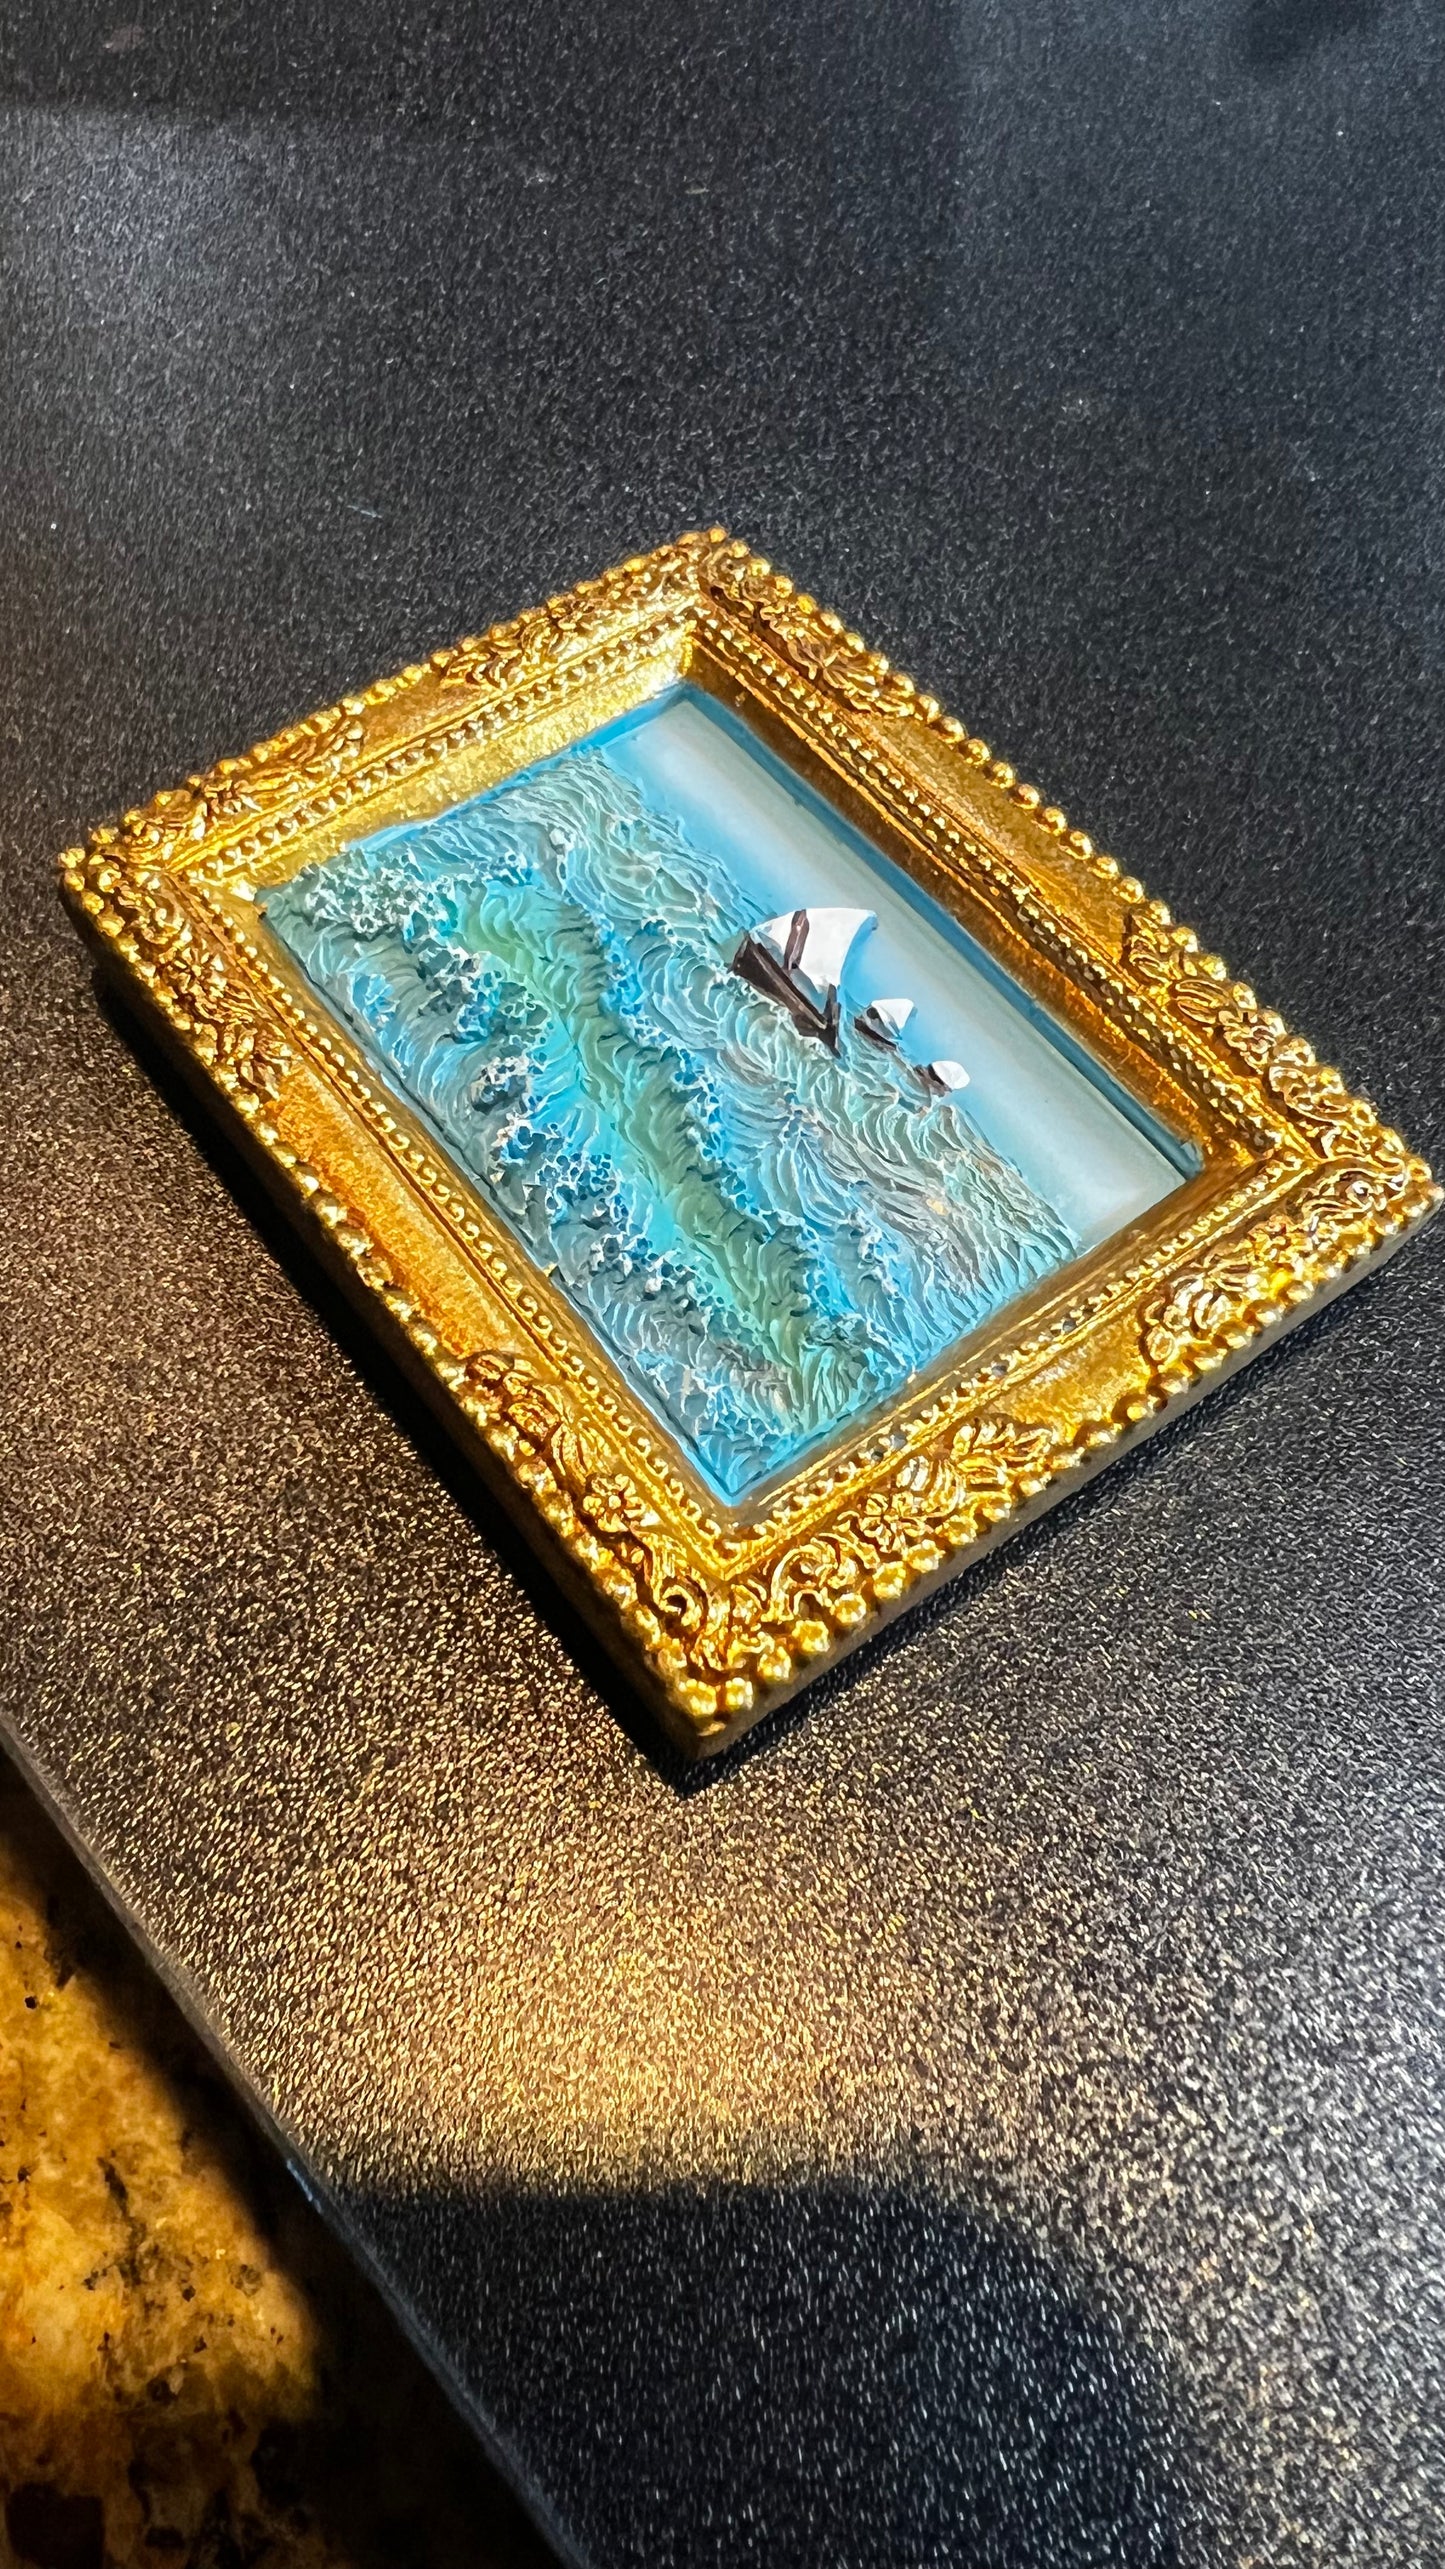 Seascape Miniature Magnet